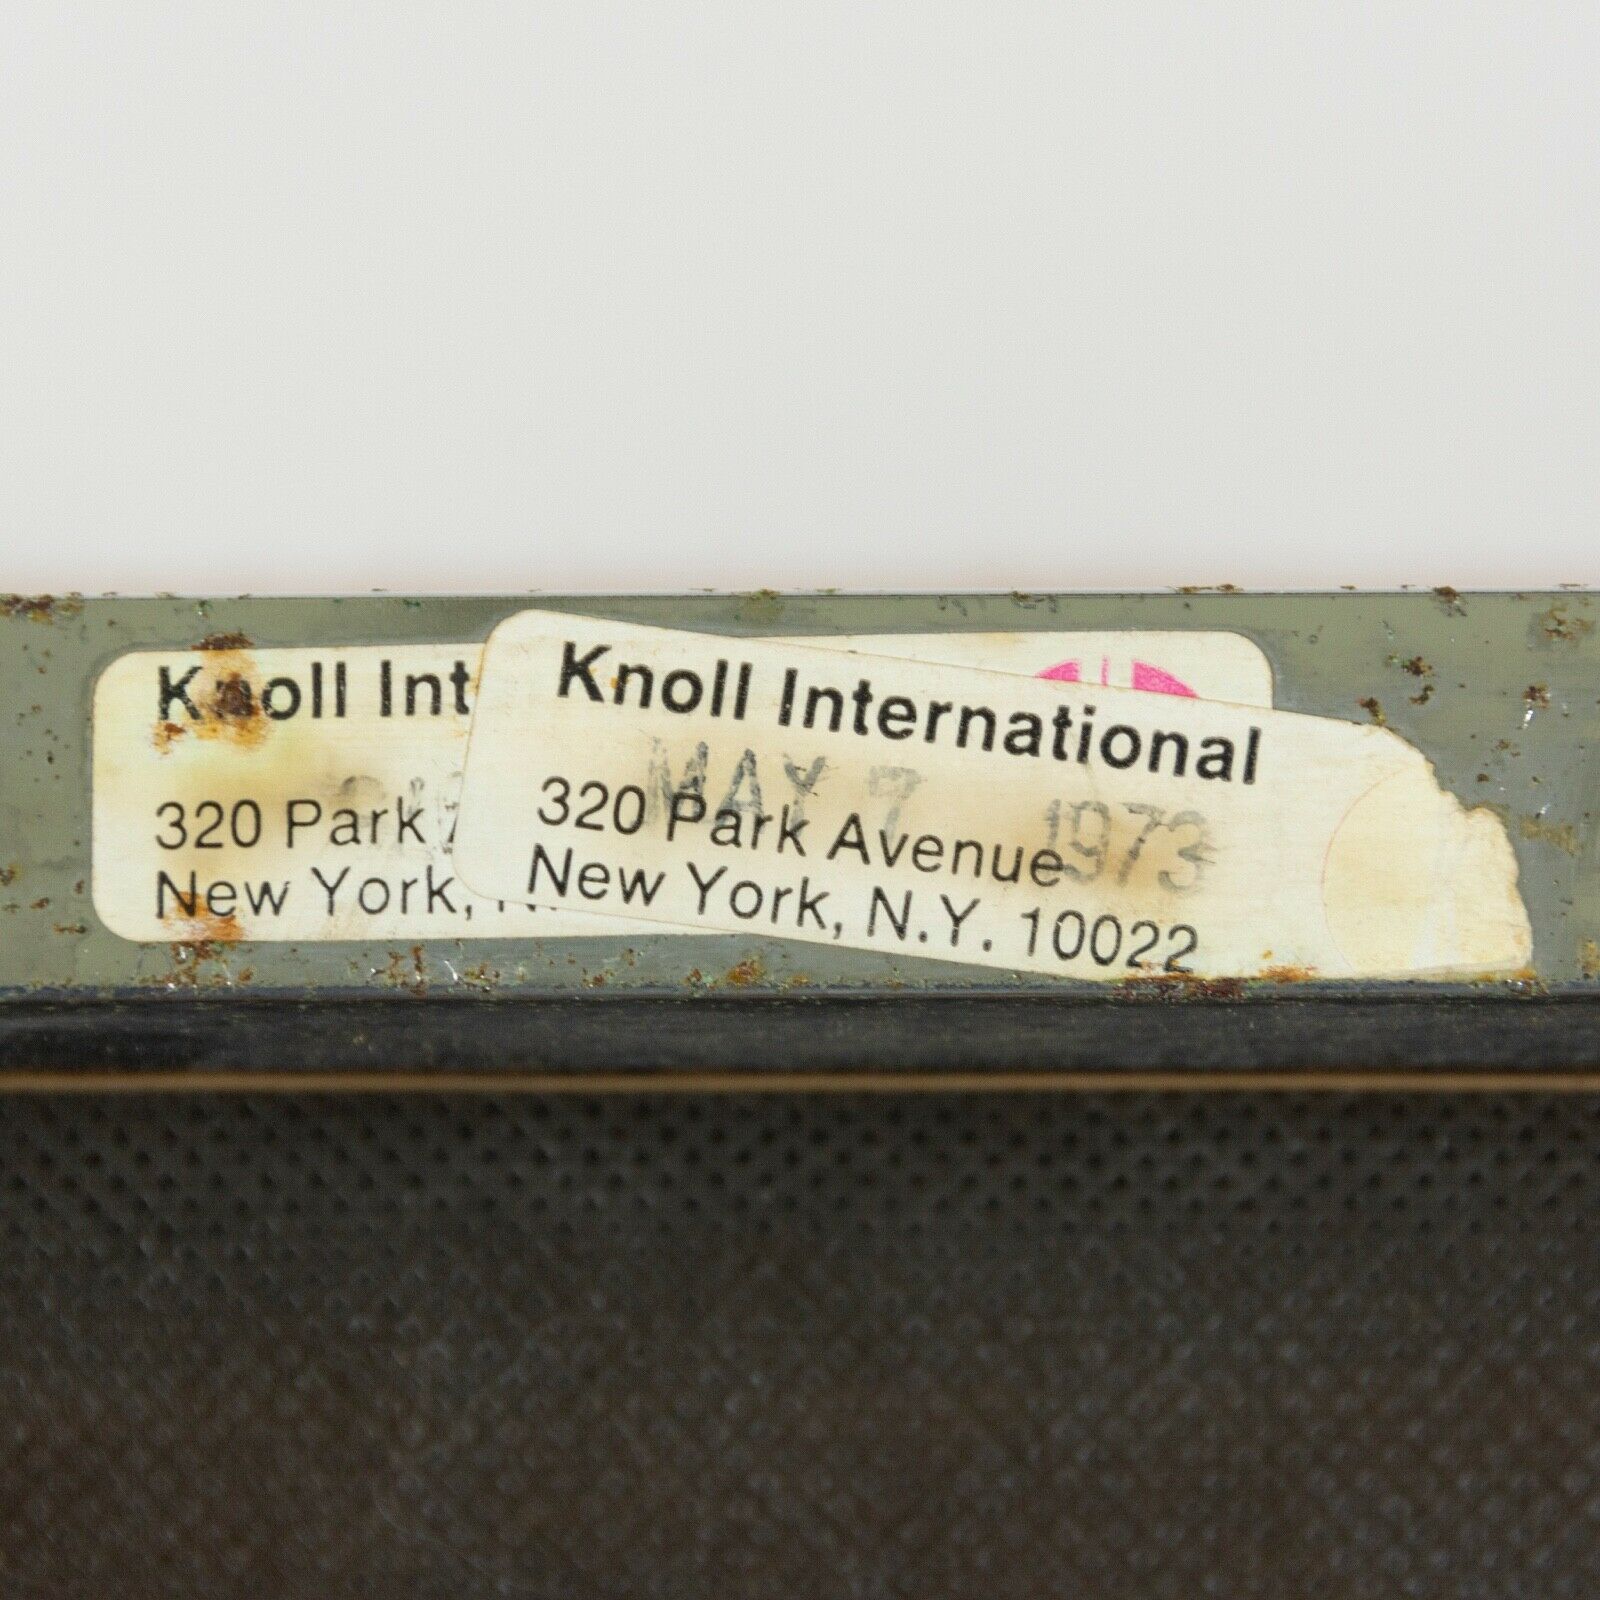 1973 Florence Knoll International Slipper Lounge Chair Brown/Burnt Orange Fabric